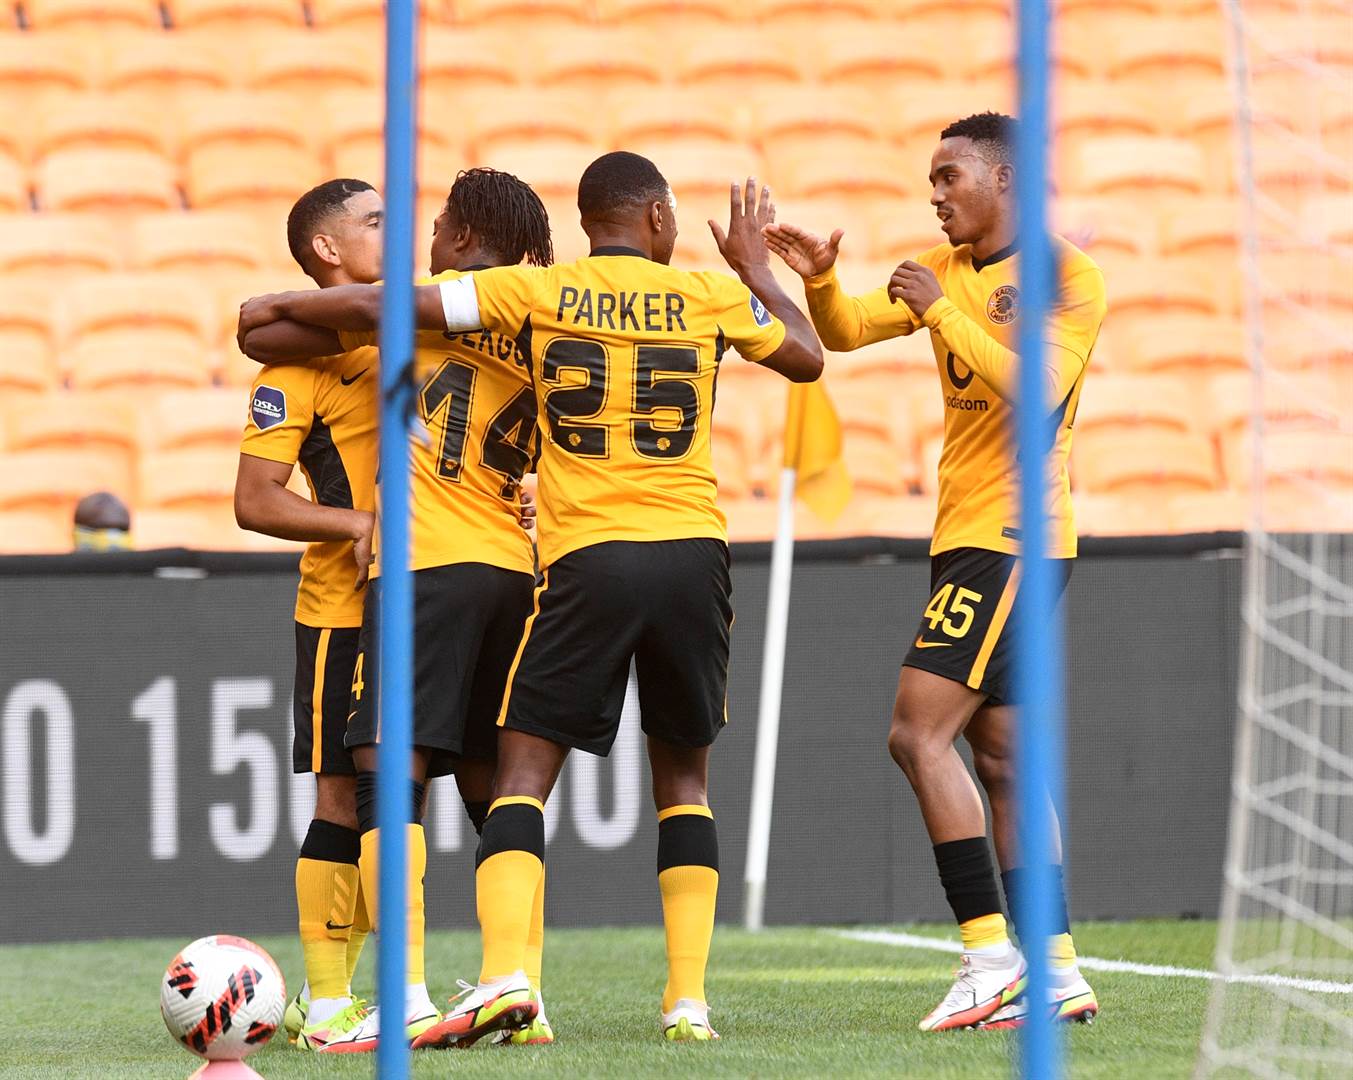 =1. Kaizer Chiefs – 26 yellows / 2 reds (32 discip